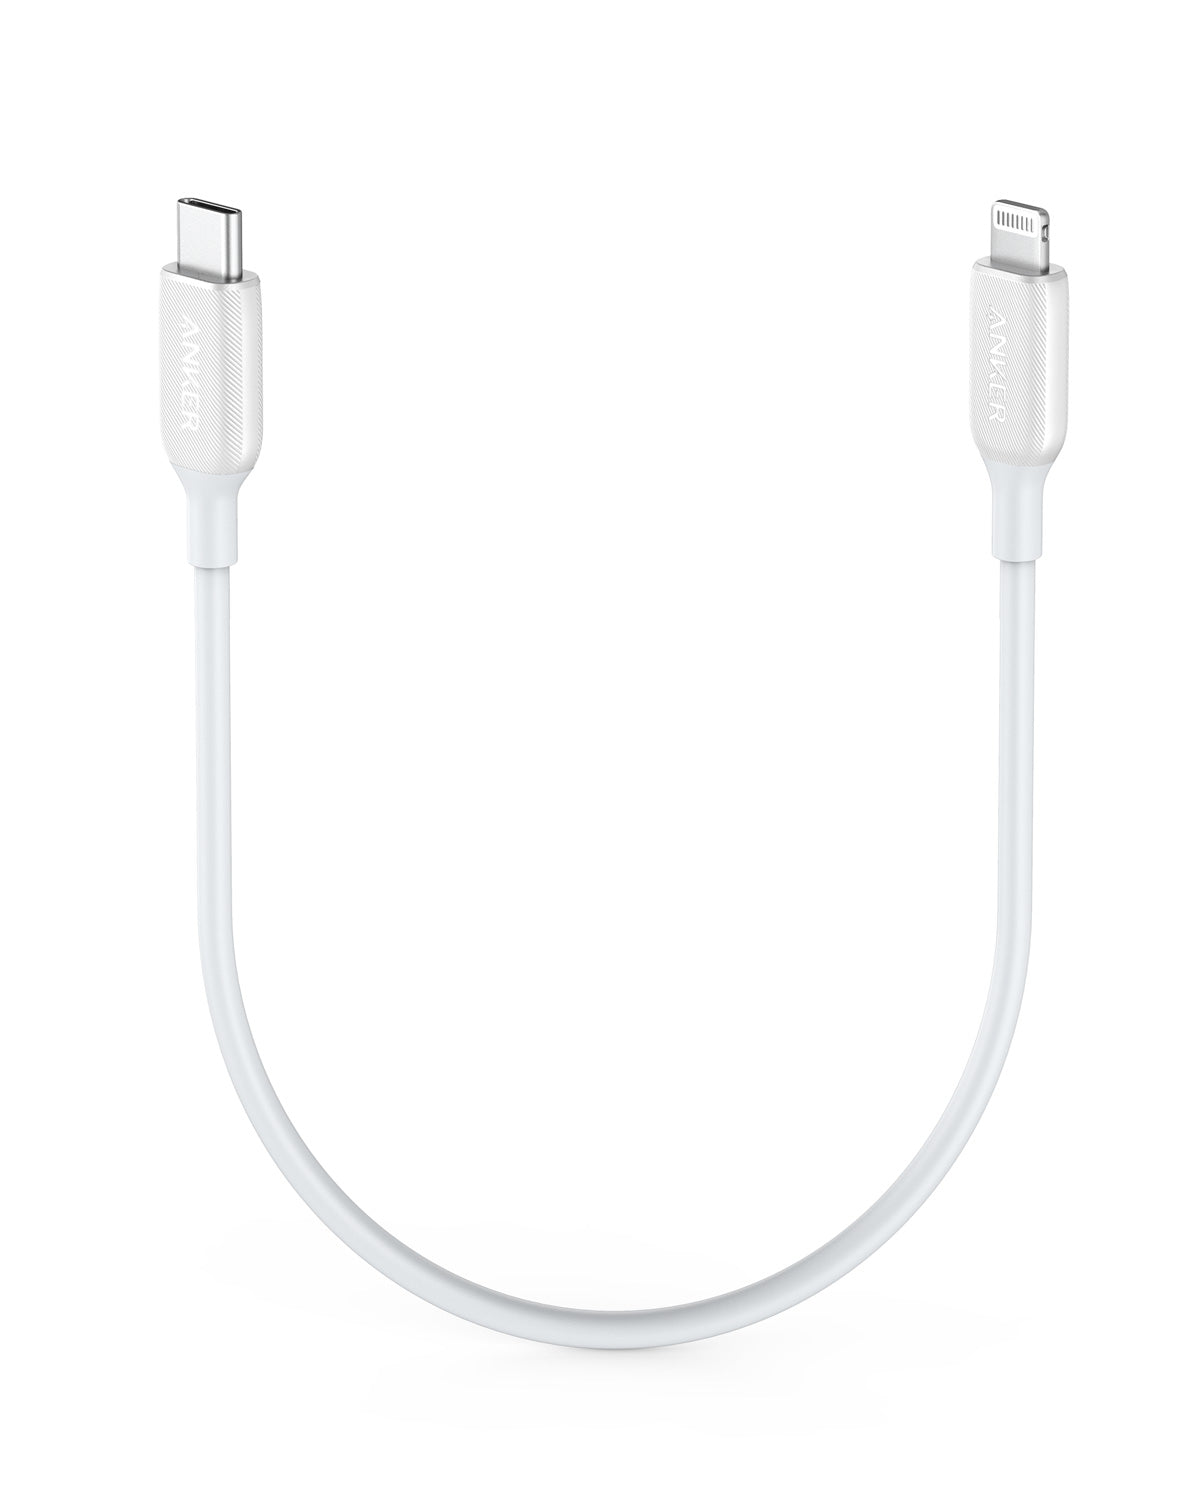 Anker 541 USB-C to Lightning Cable (1ft / 3ft / 6ft) - Anker US